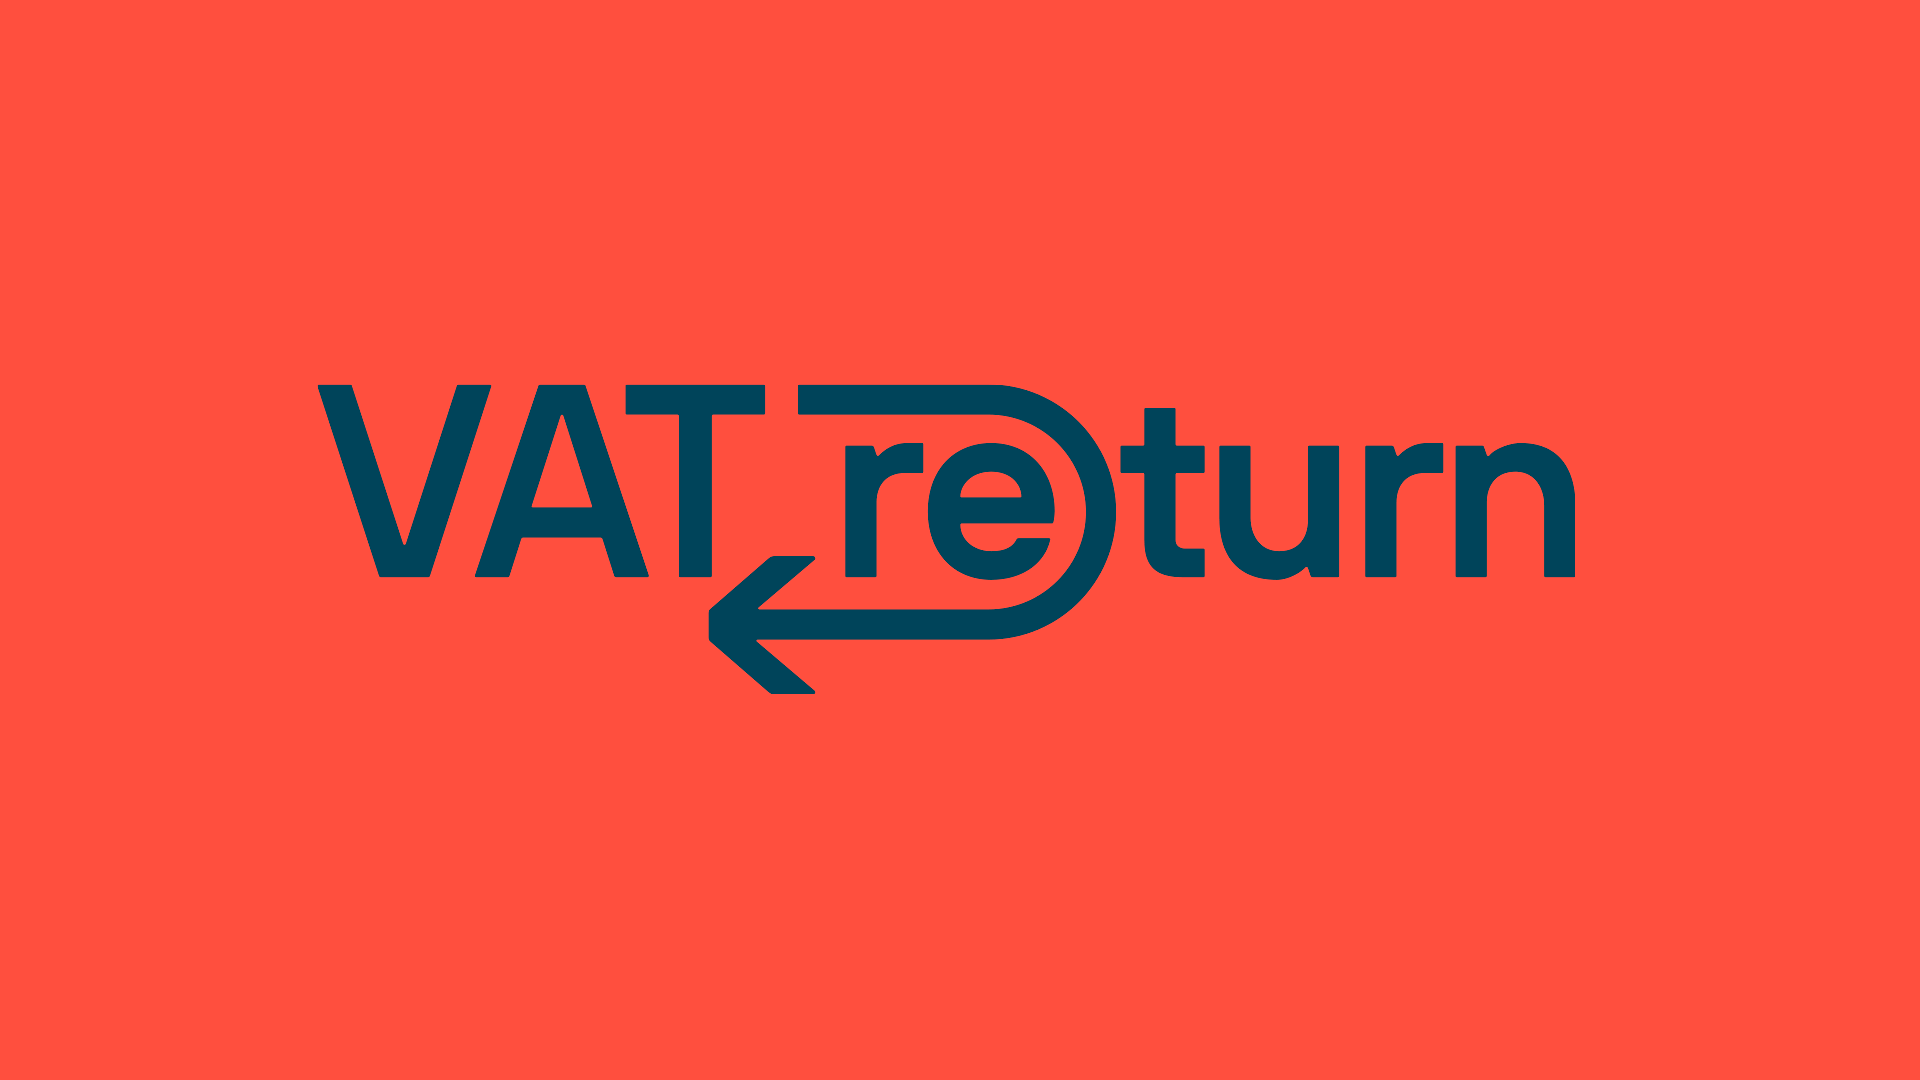 VAT refund logotype positive